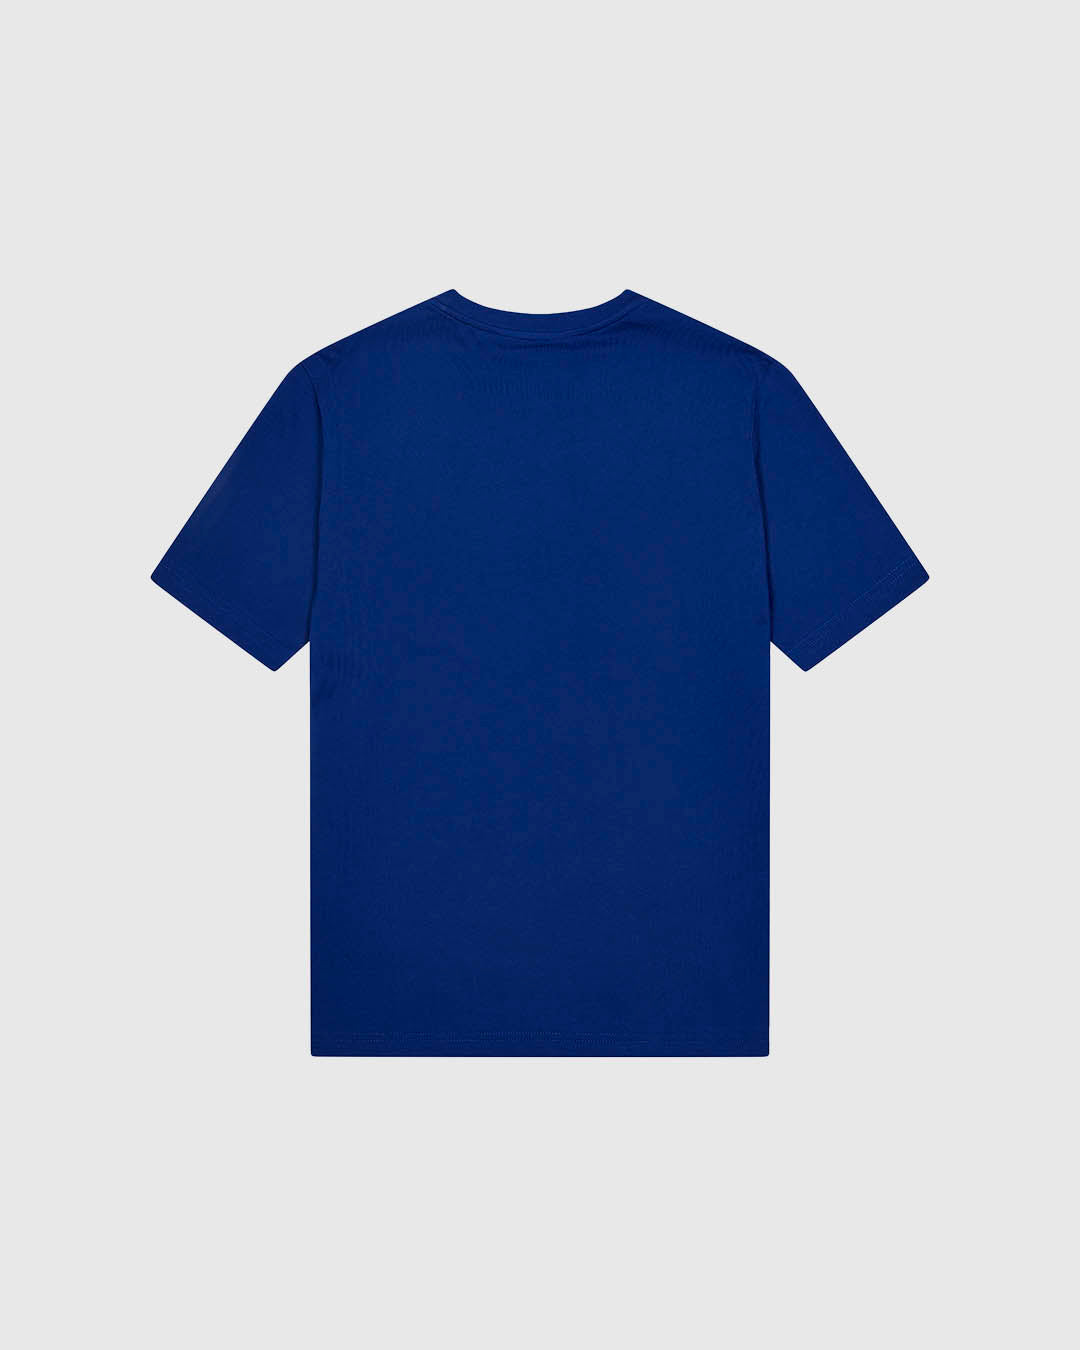 PFC: 003-1 - Men's T-shirt - Royal Blue